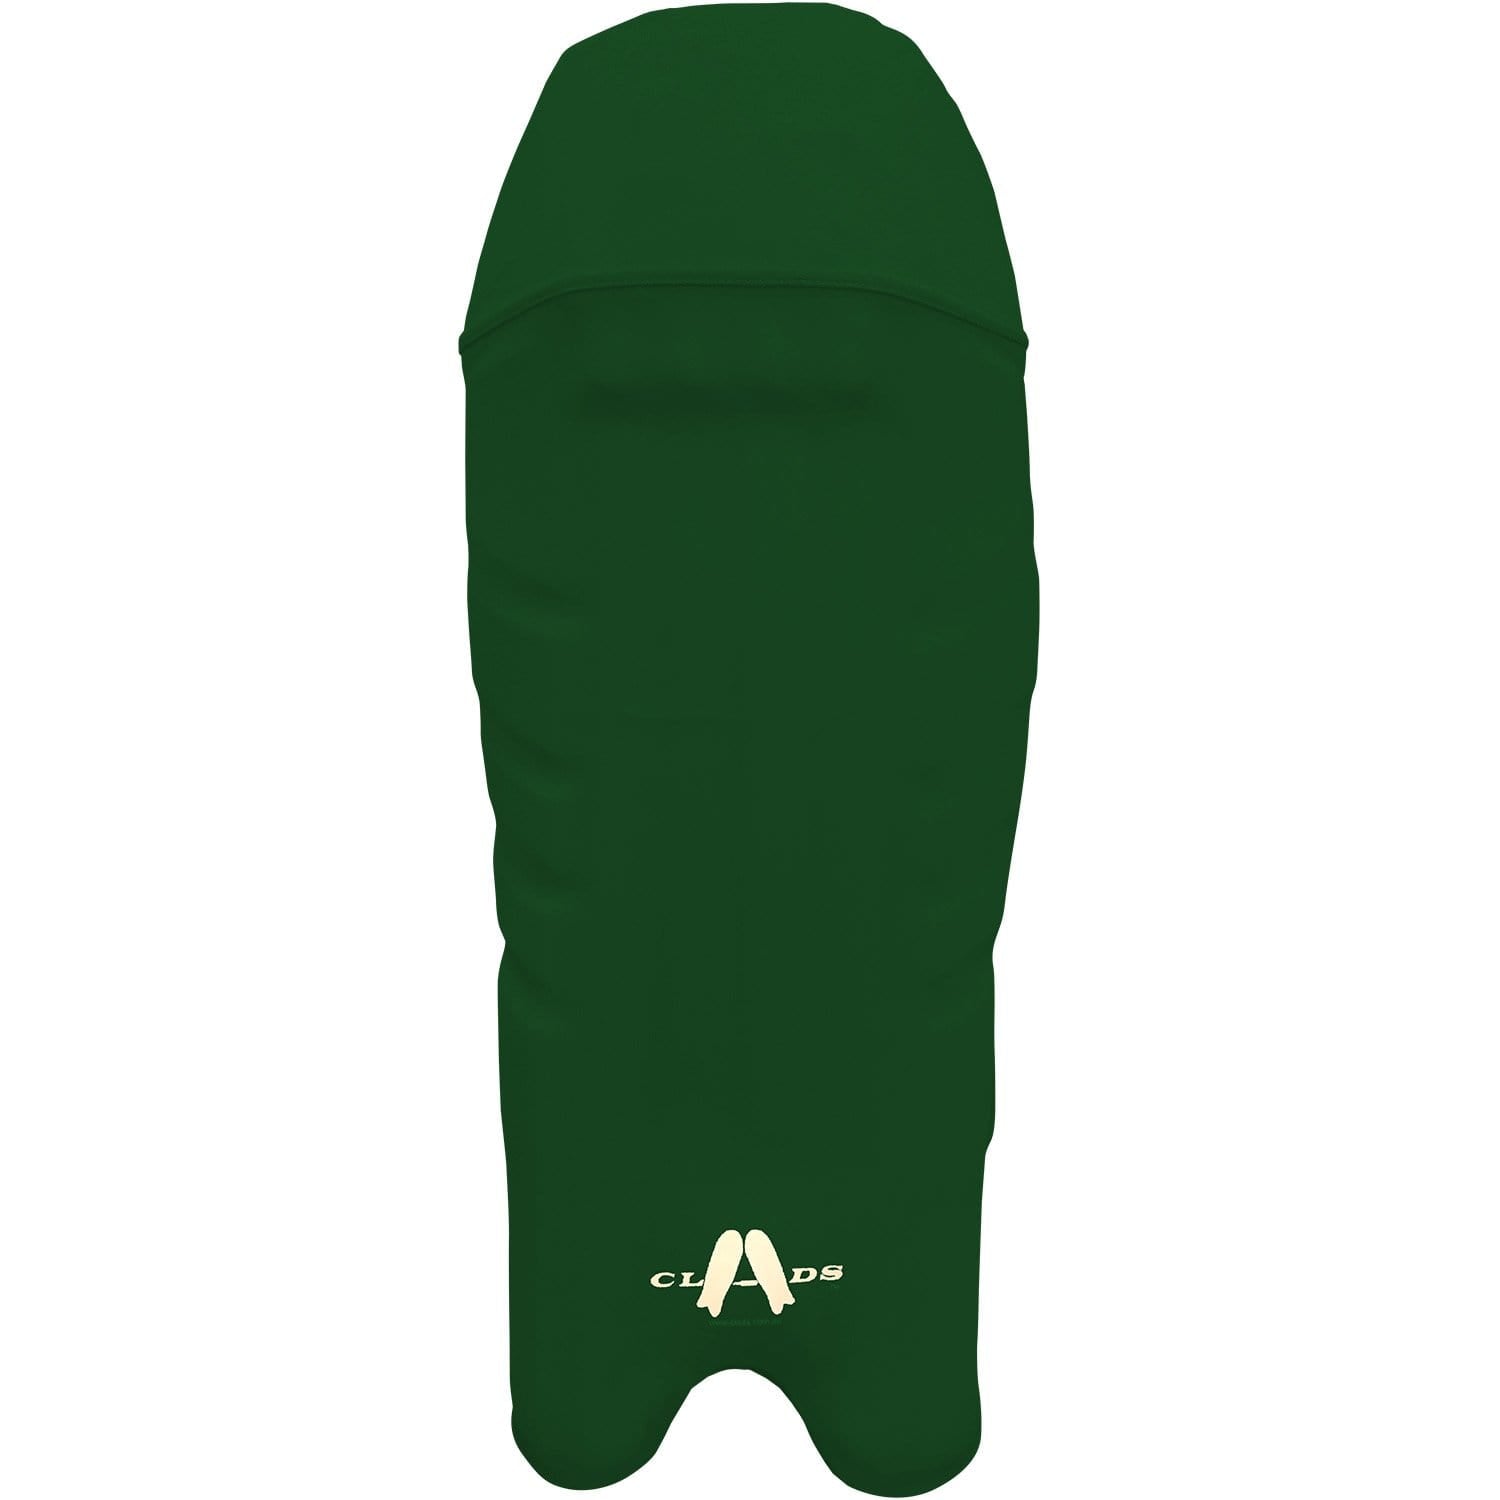 Aero WicketKeeping Green Aero Clads Wicket Keeping Pad Green Covers